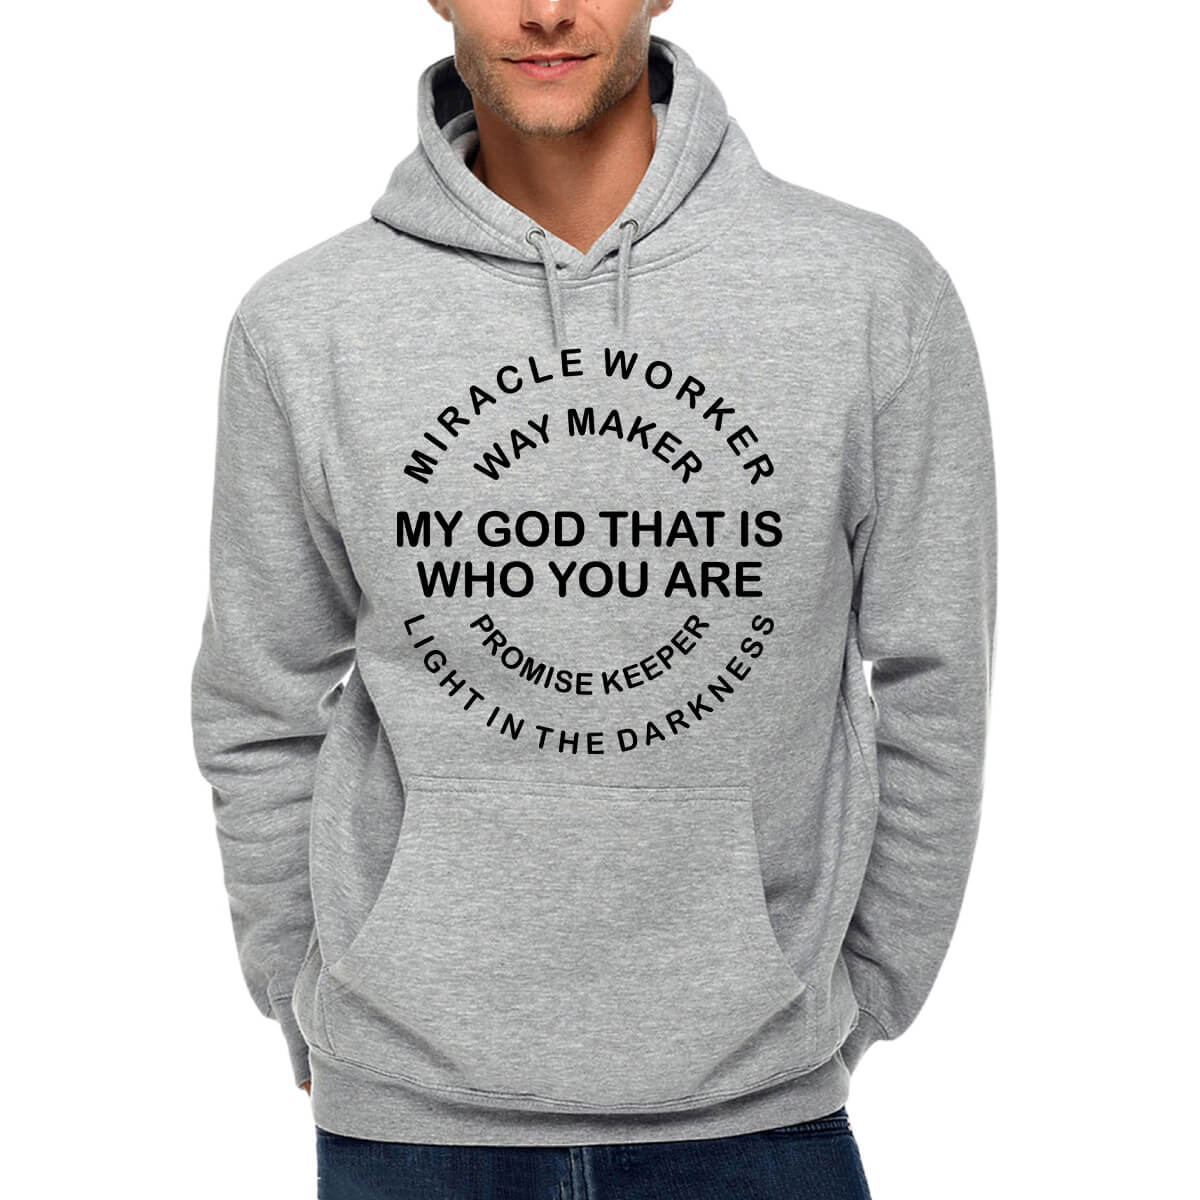 WayMaker Miracle Worker Men's Sweatshirt Hoodie